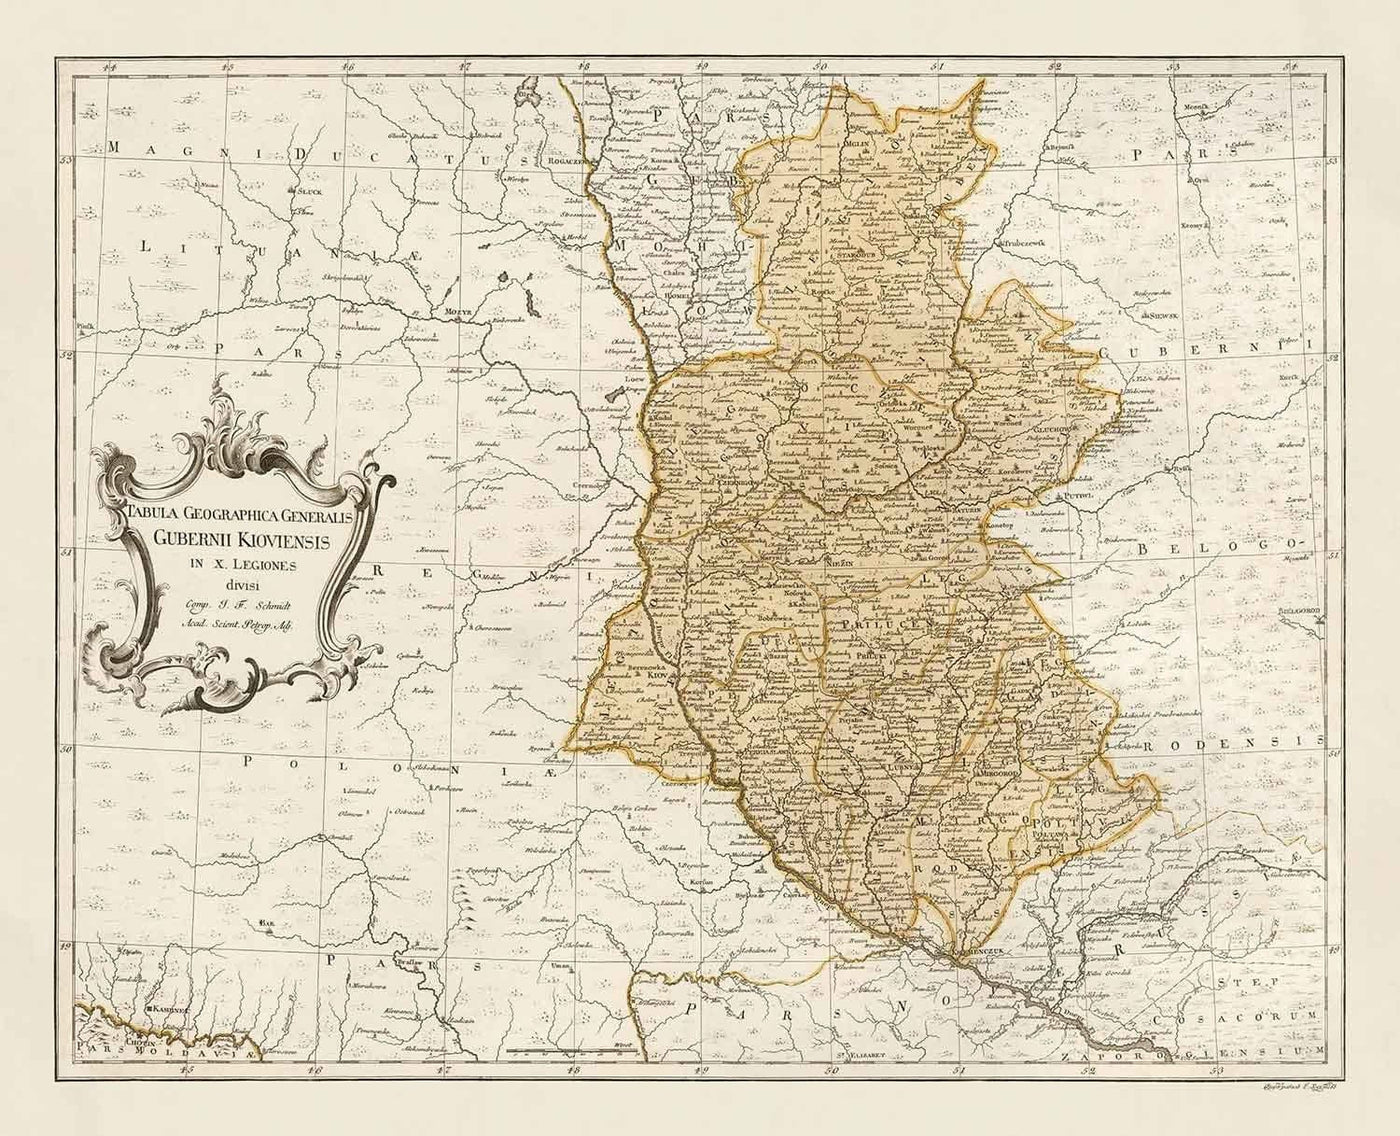 Old Map of Ukraine, 1770 - Kiev Governate, Russian Empire - Kremenchuk, Poltava, Cherkasy, Chernihiv, Cities, War